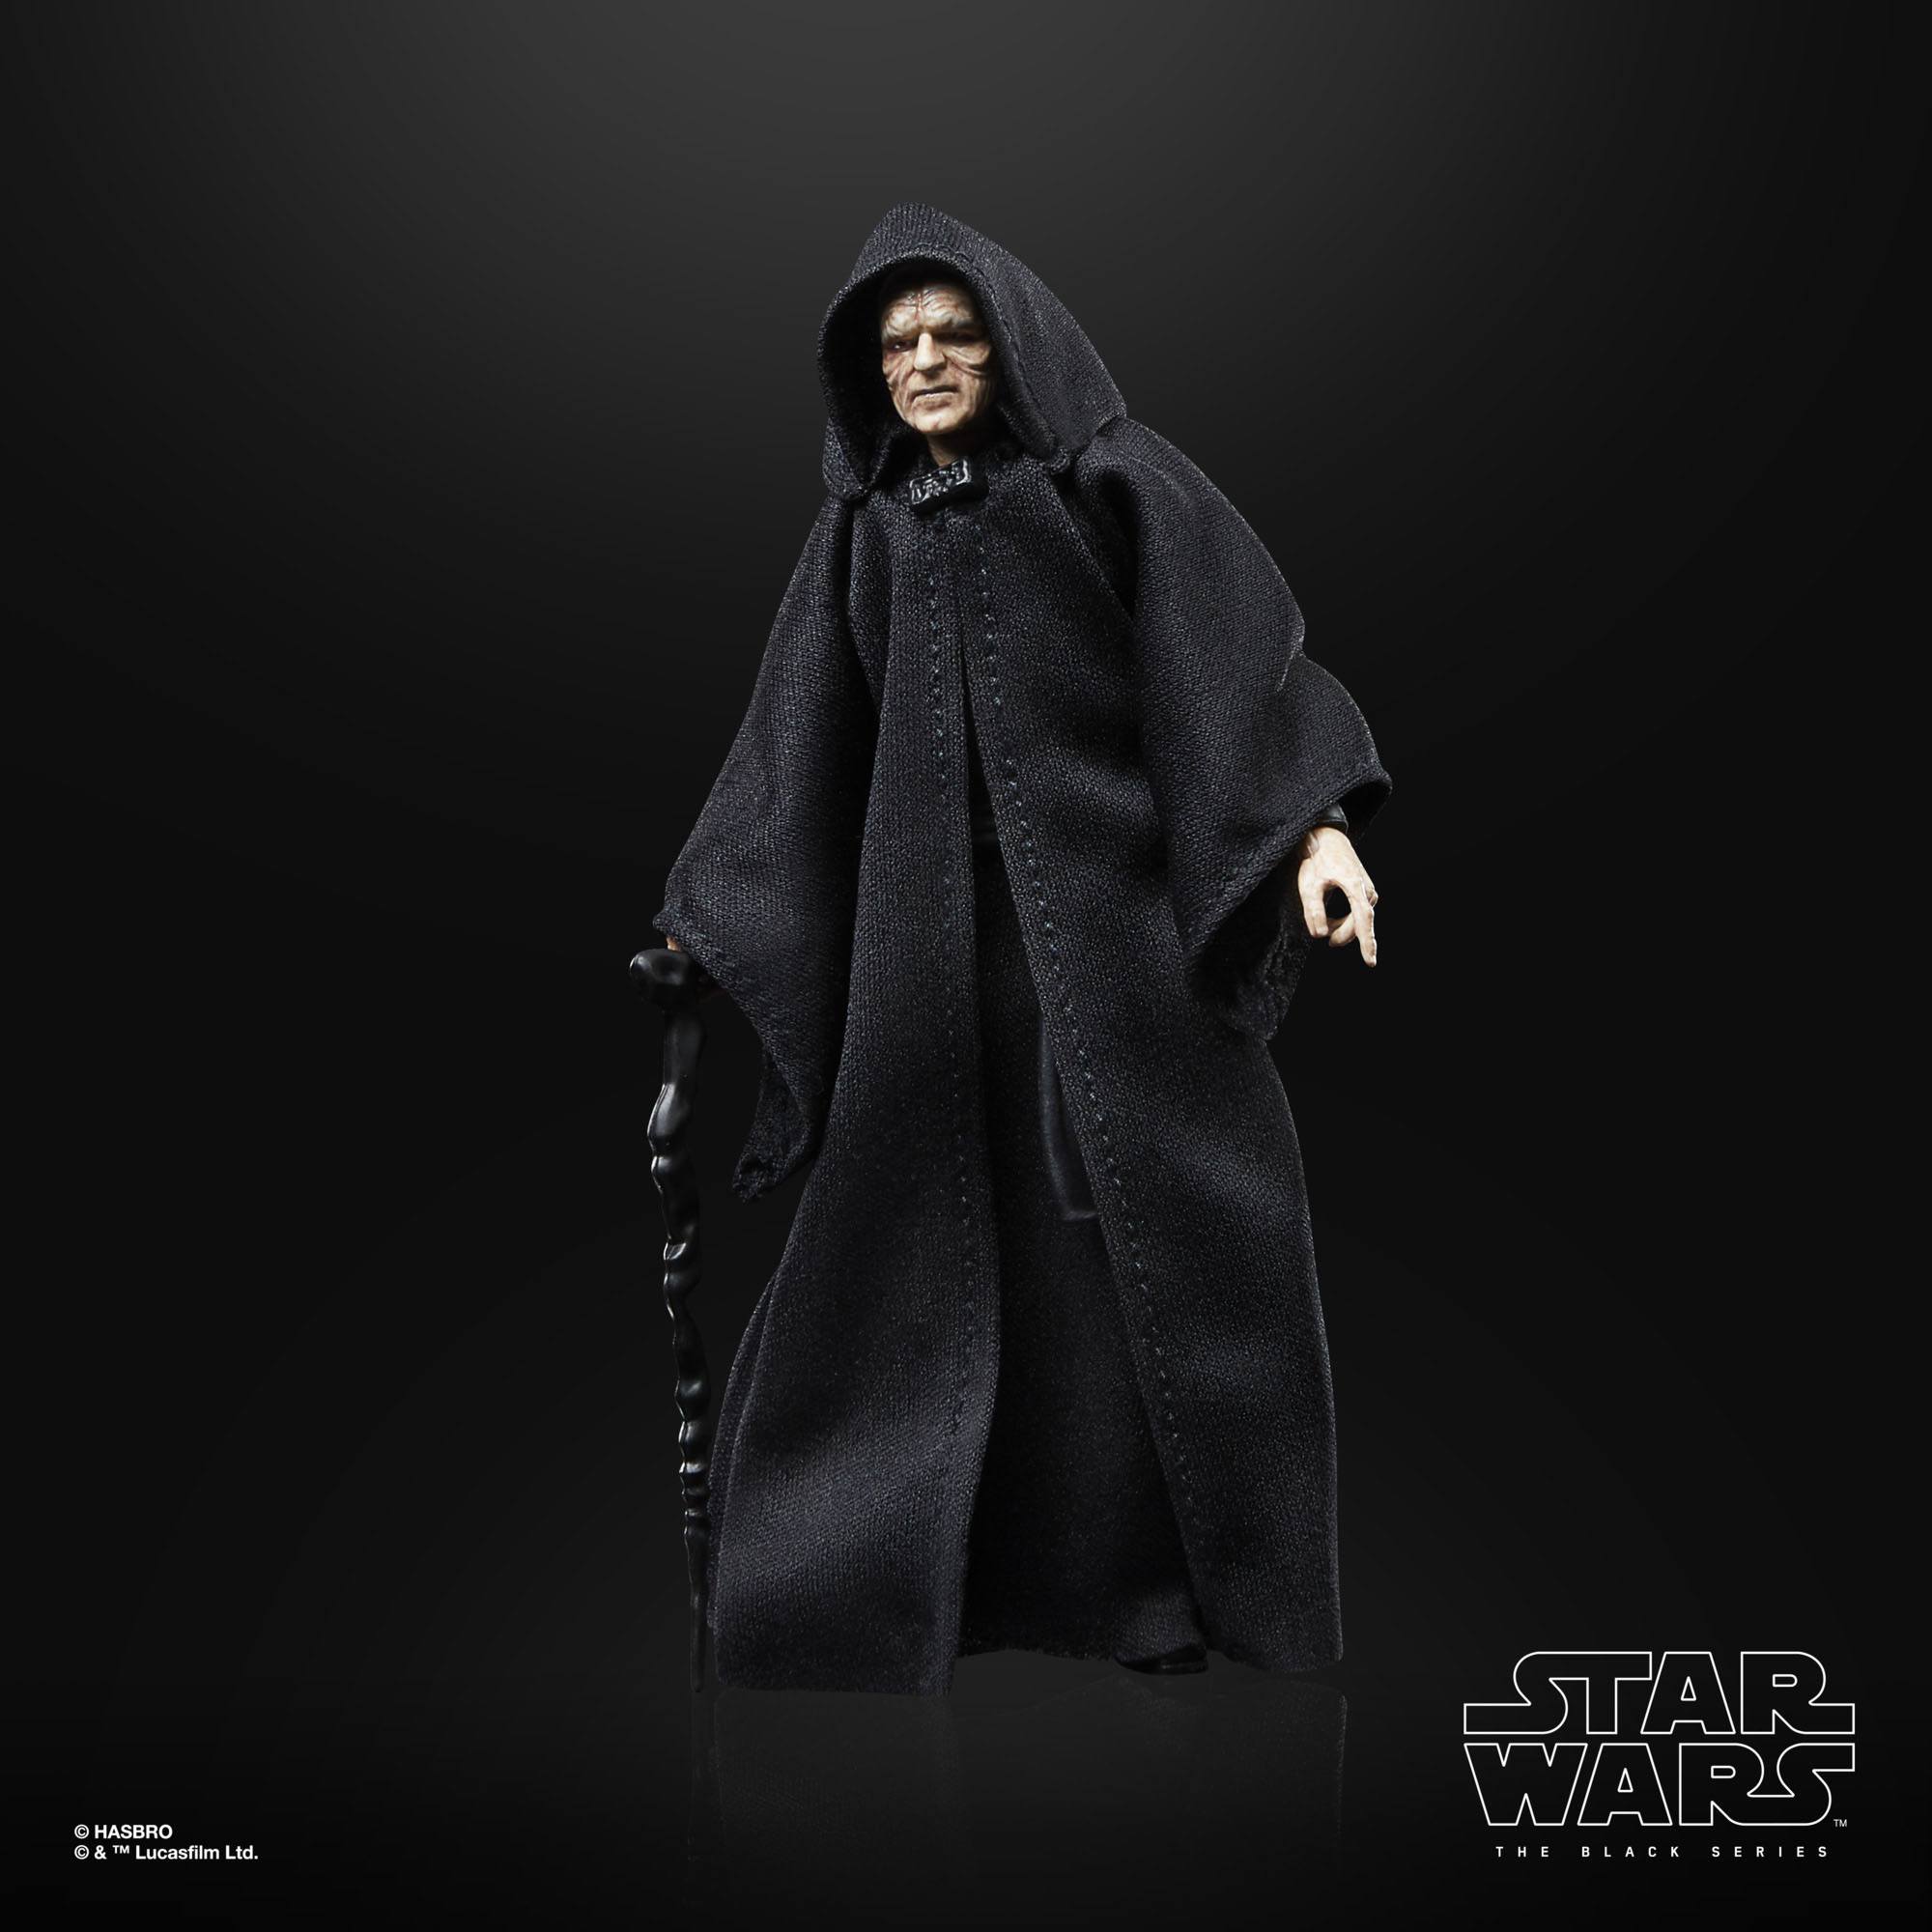 Star Wars Episode VI 40th Anniversary Black Series Actionfigur The Emperor 15 cm HASF7081 5010996135599